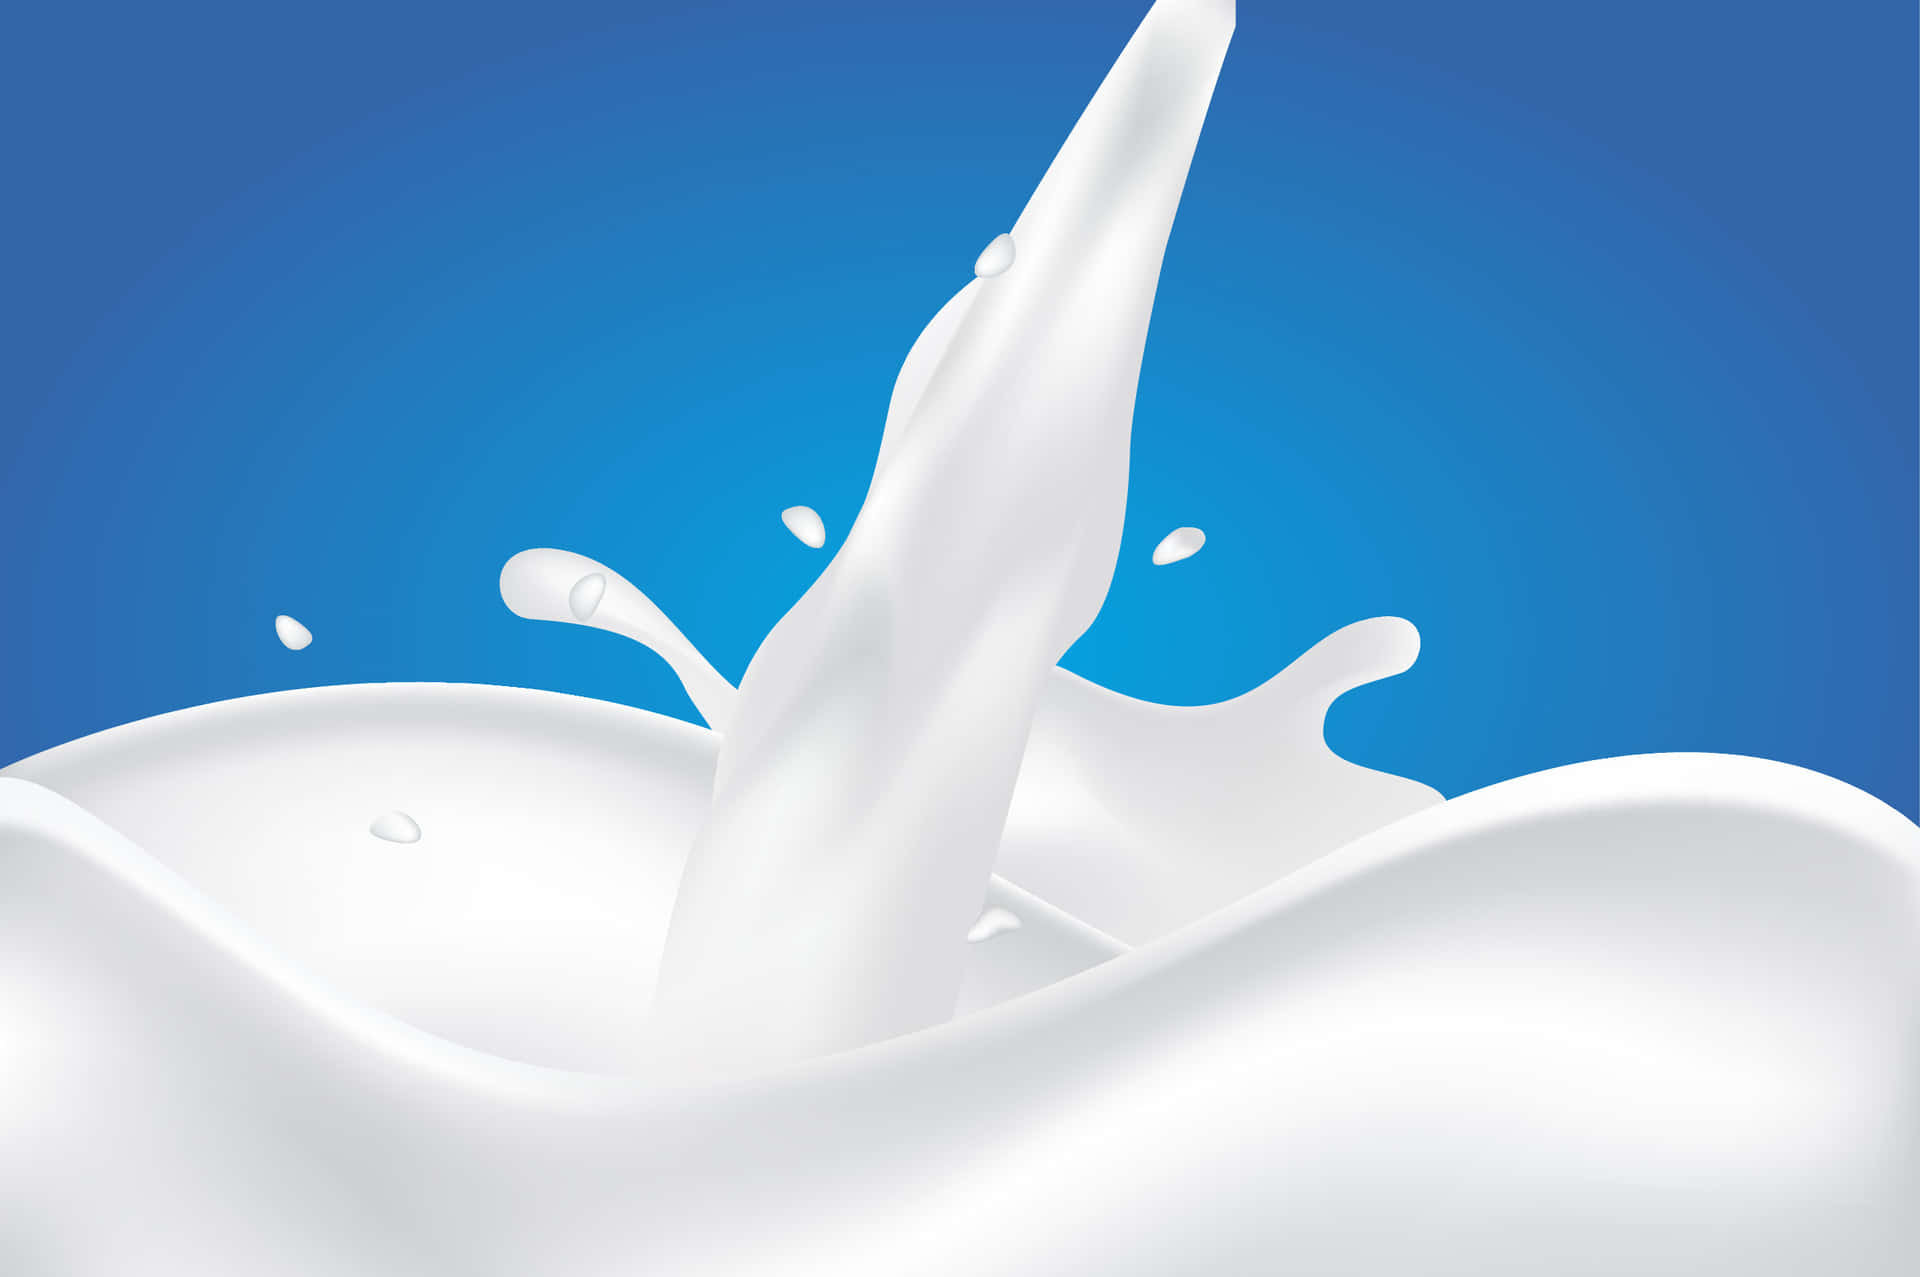 Milk Splash On Blue Background